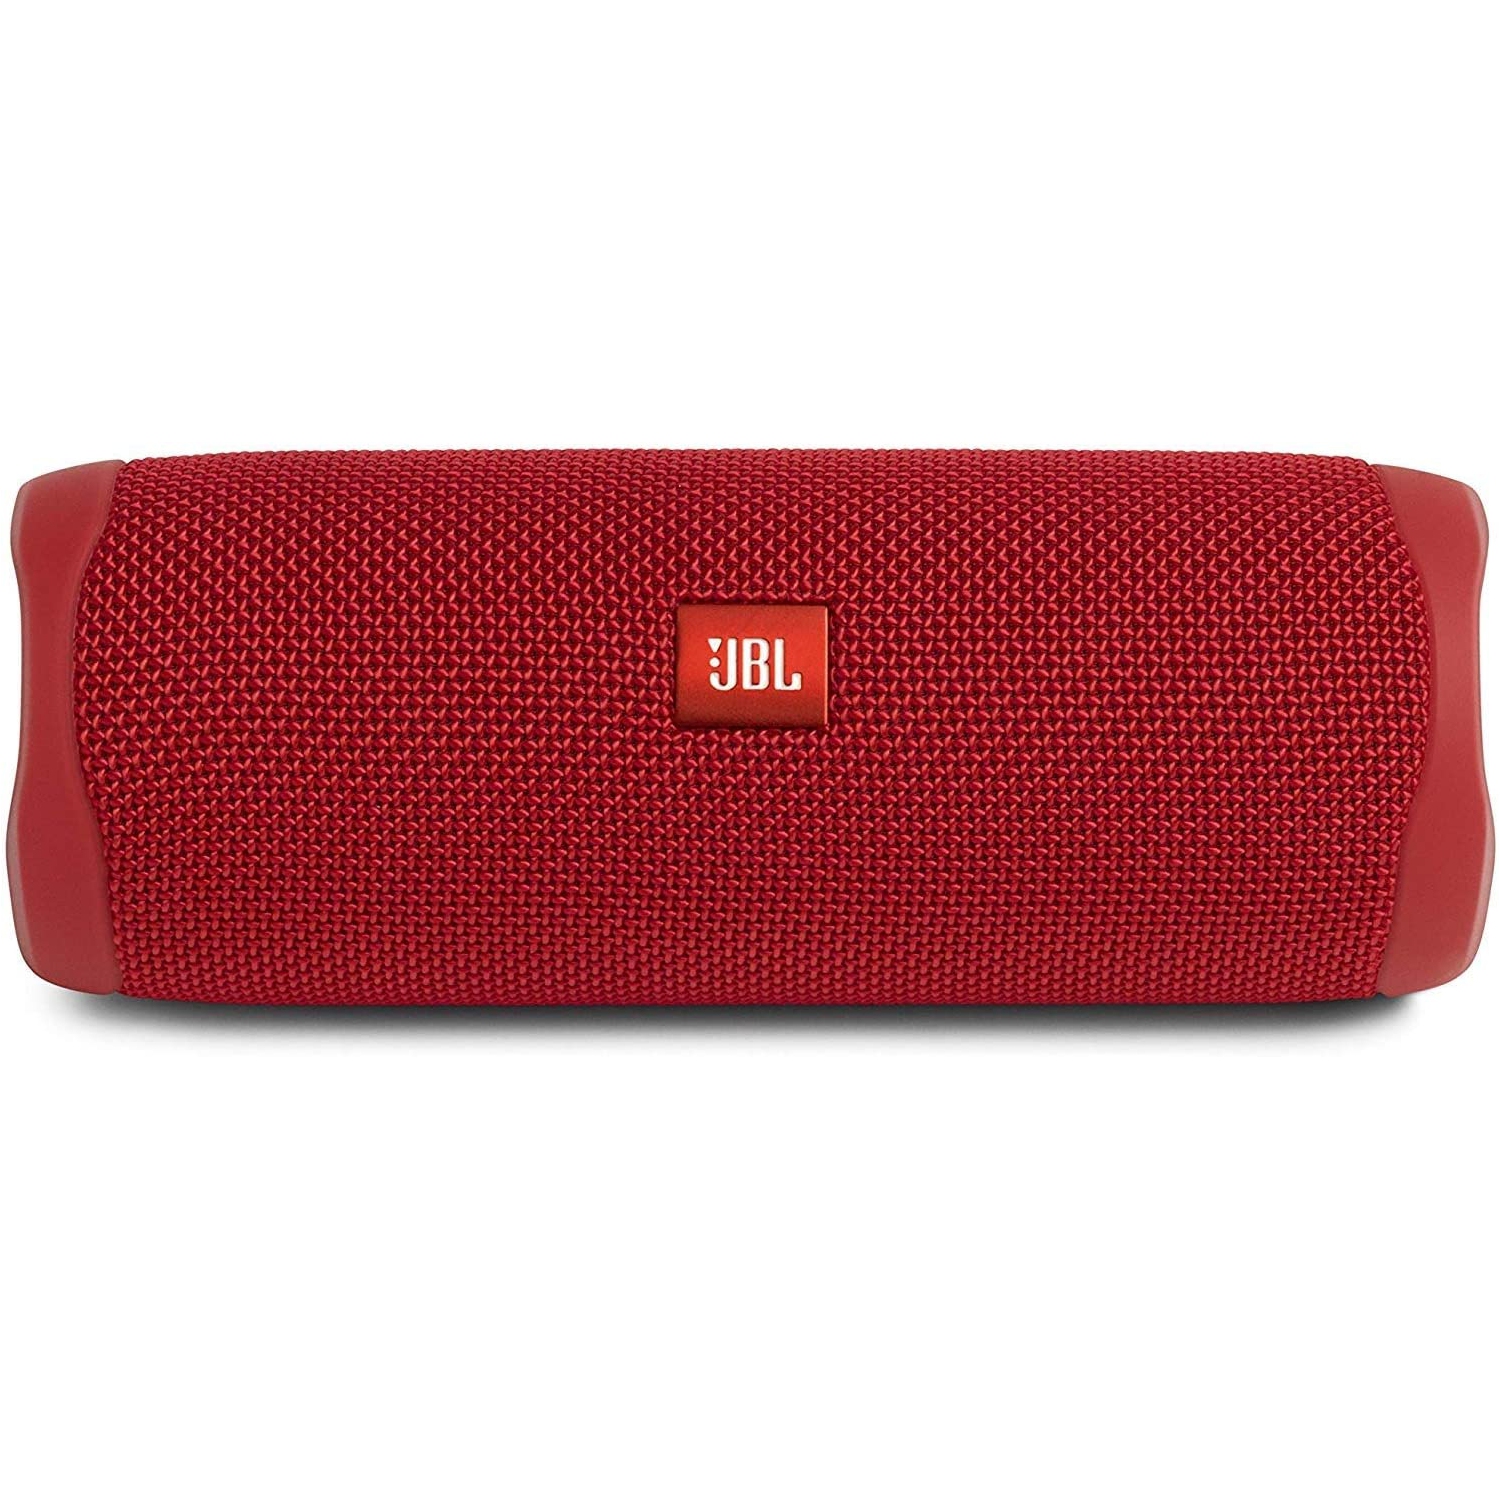 JBL FLIP 5 Portable Bluetooth Speaker -Brand New - Red